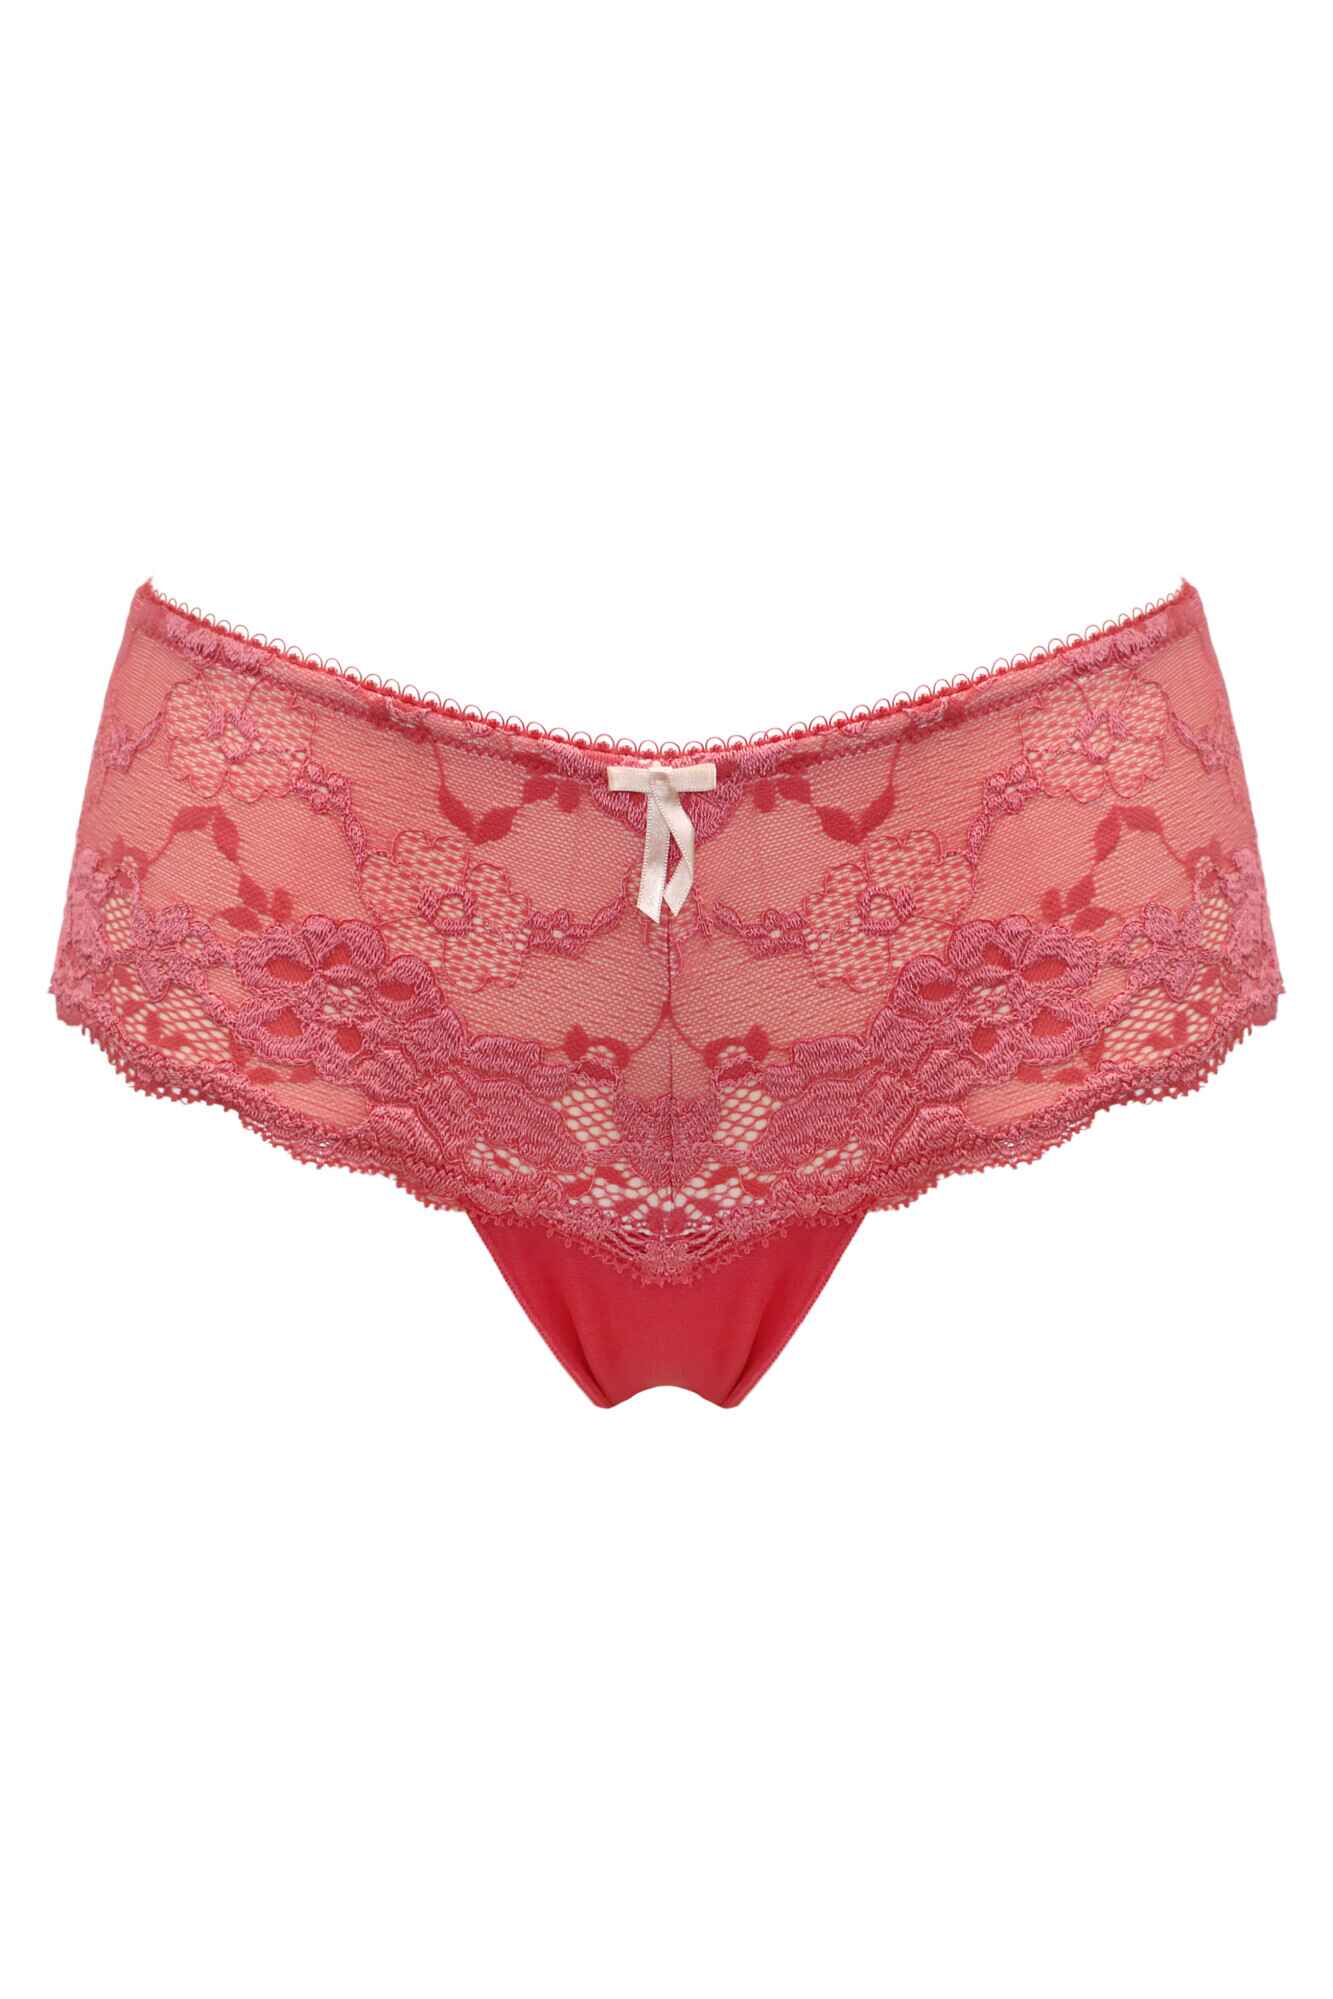 Womans Brazilian French Knickers Lace Panties Briefs Lingerie Plus